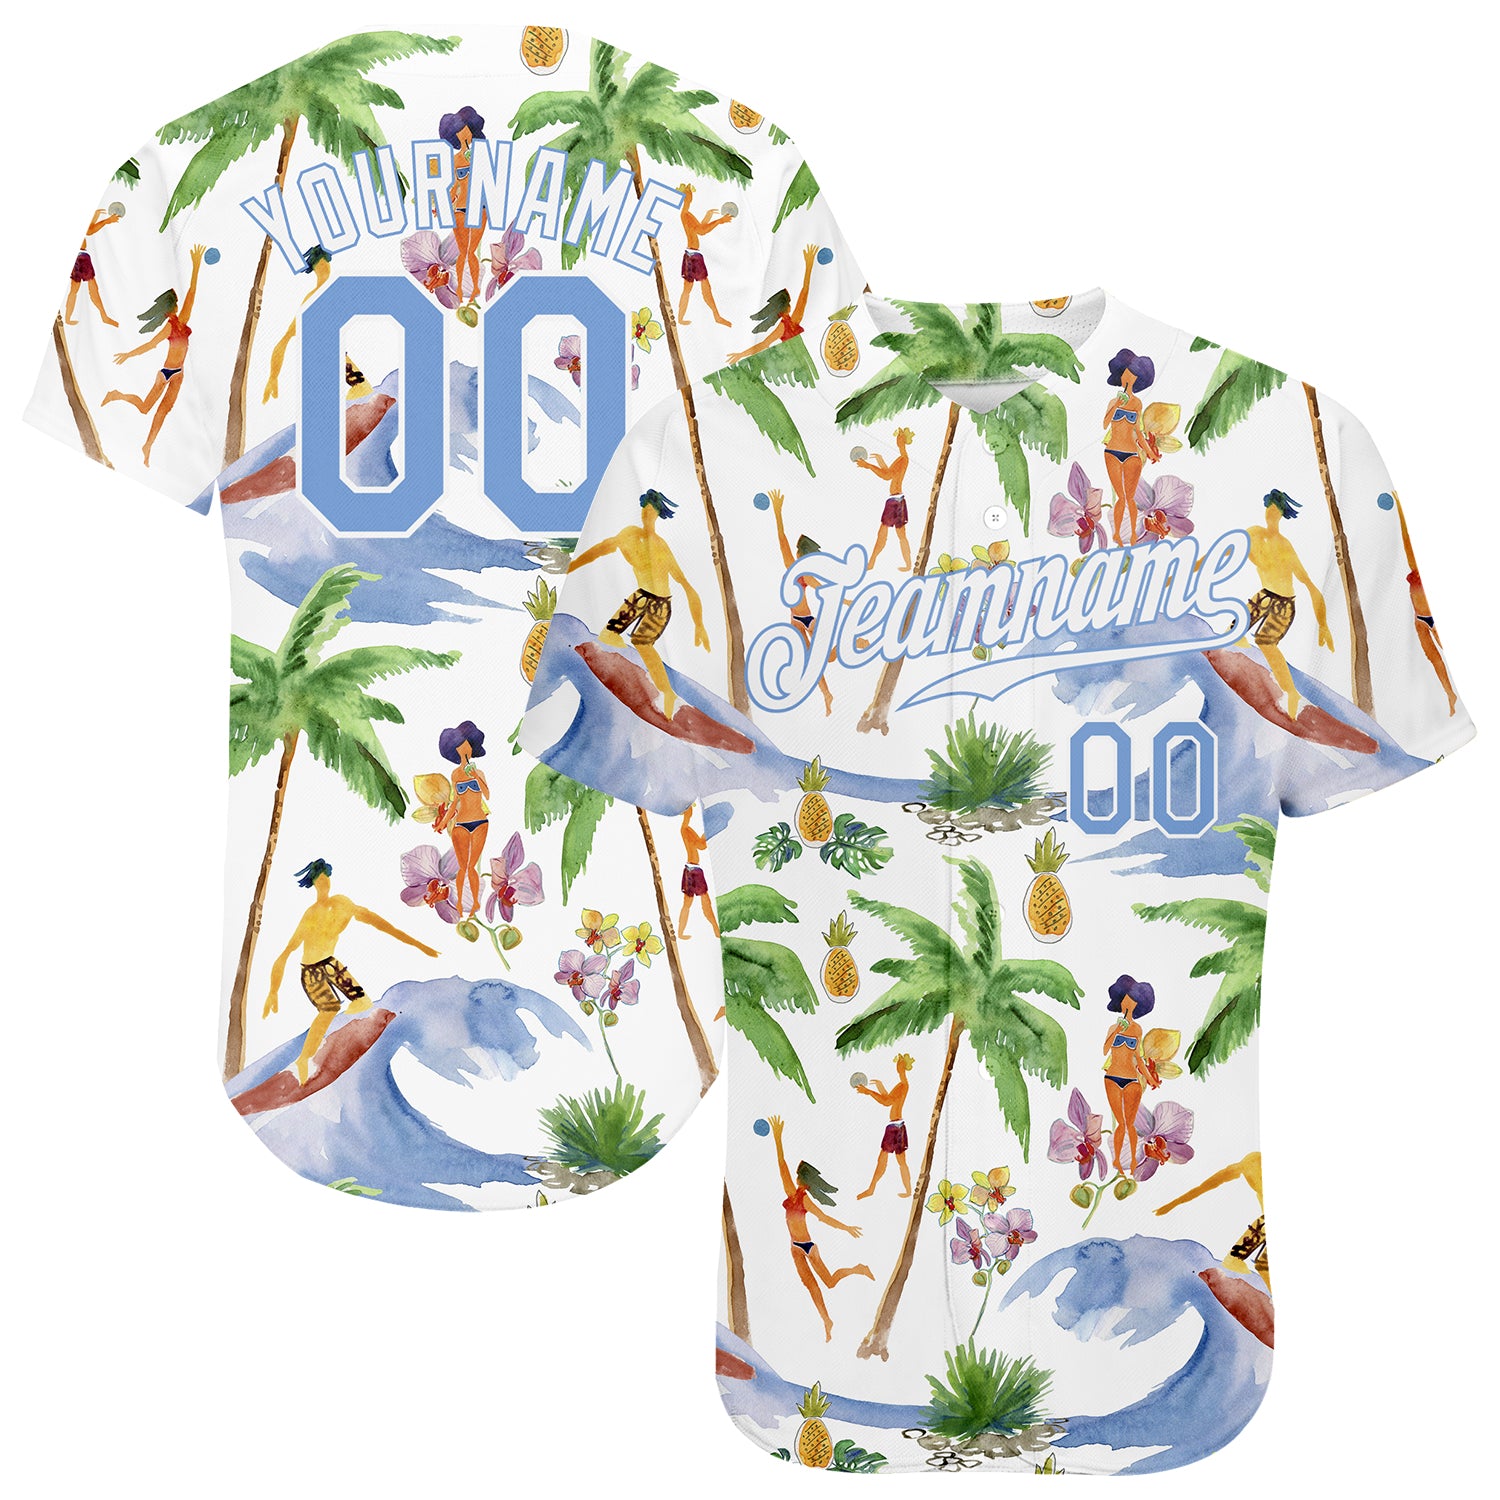 Miami Marlins MLB Stitch Baseball Jersey Shirt Design 6 Custom